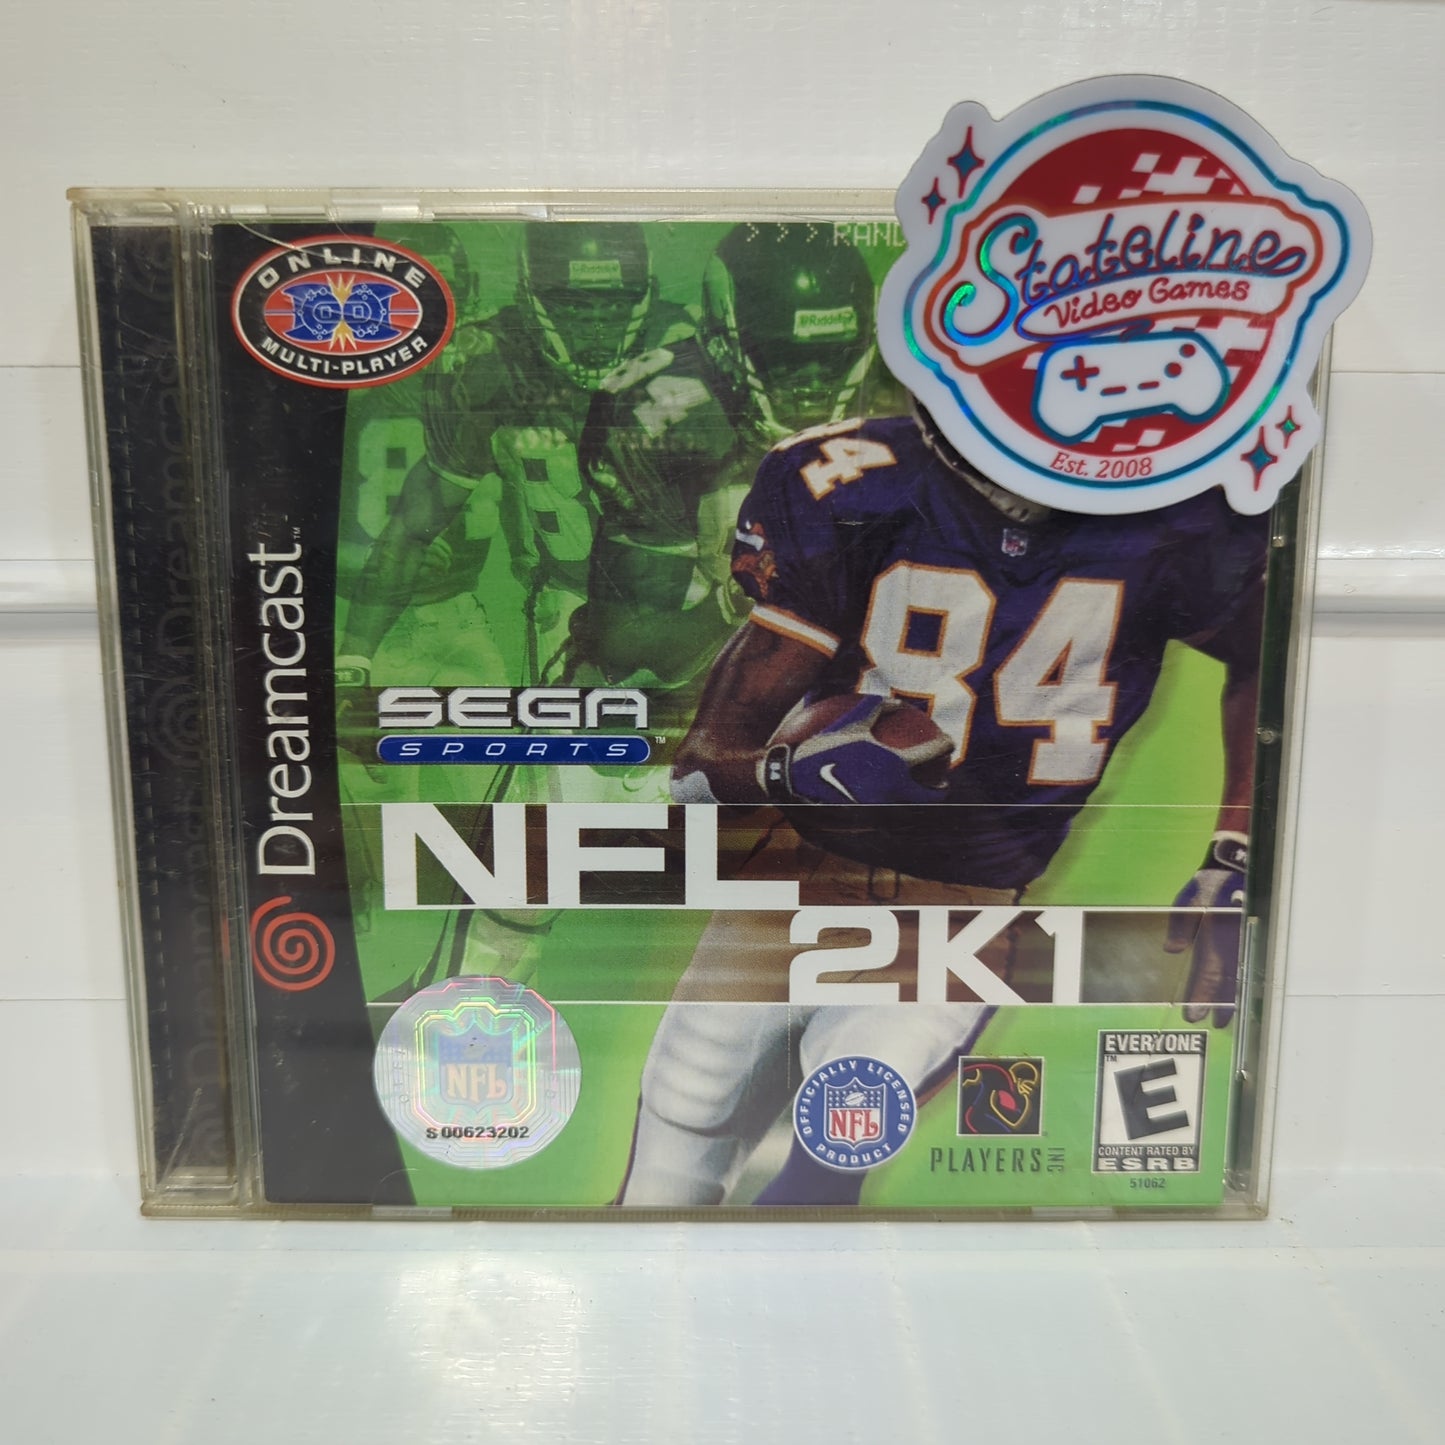 NFL 2K1 - Sega Dreamcast